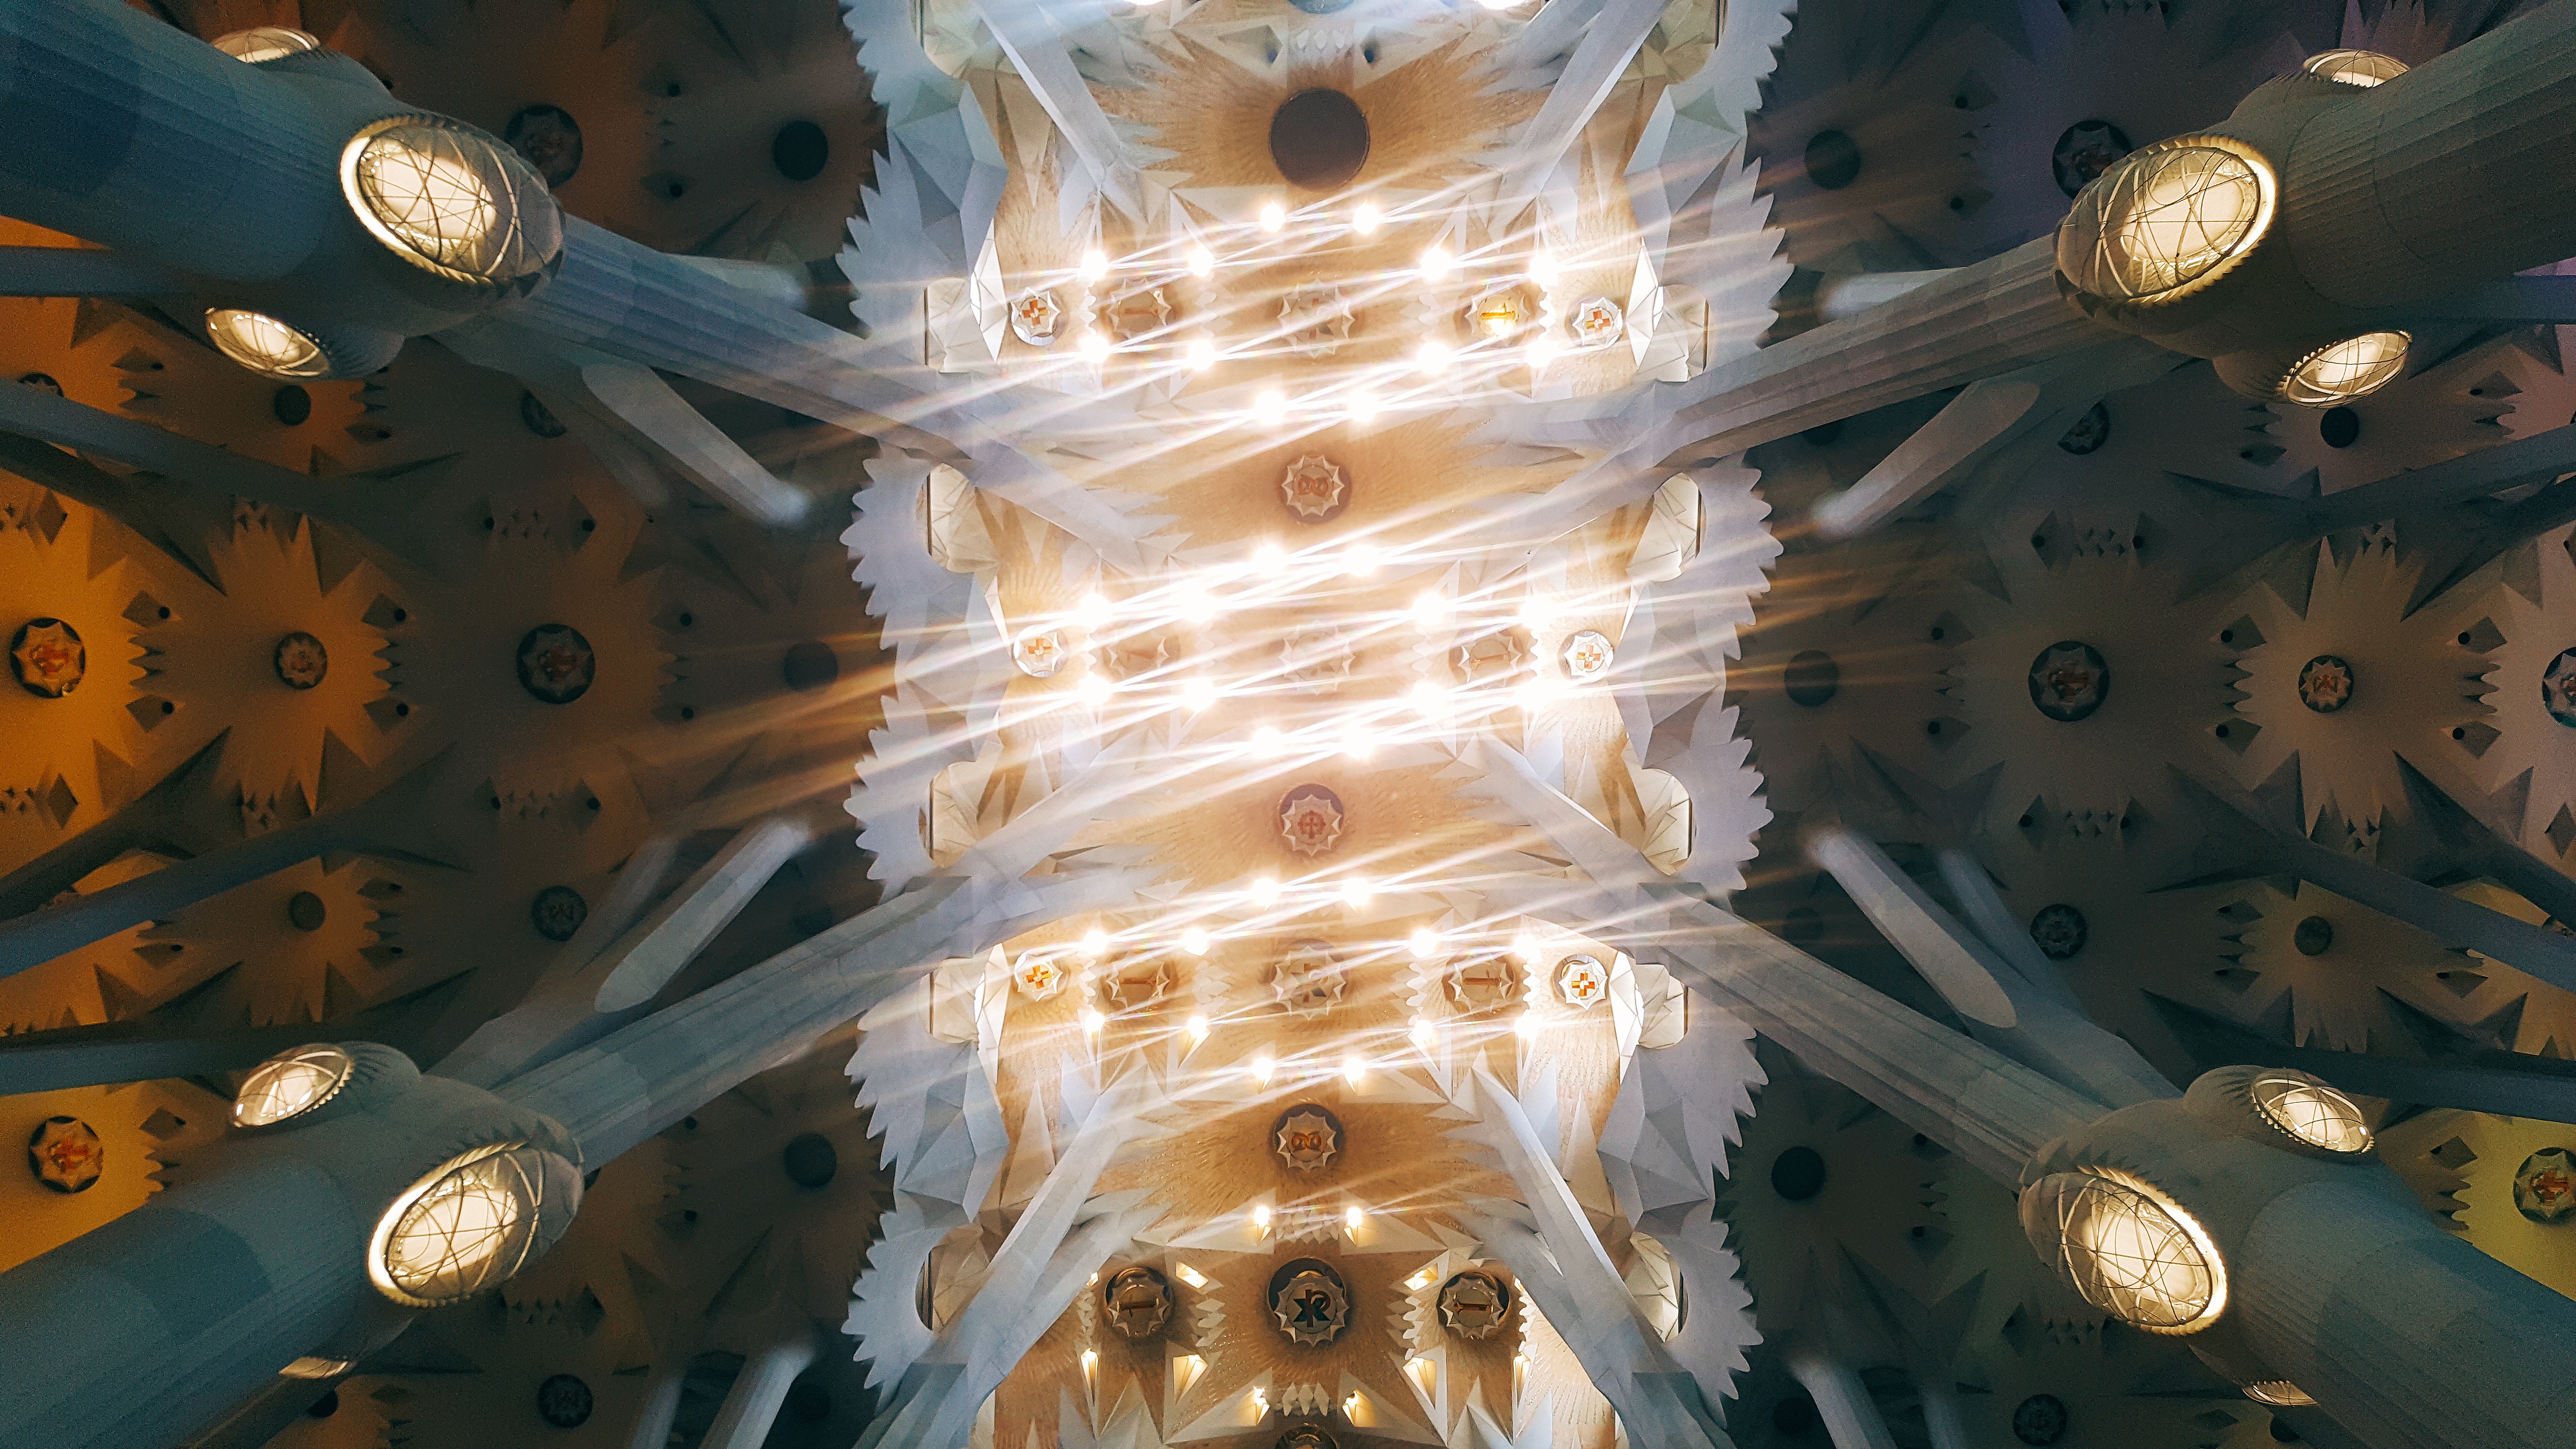 an image of La Sagrada Família